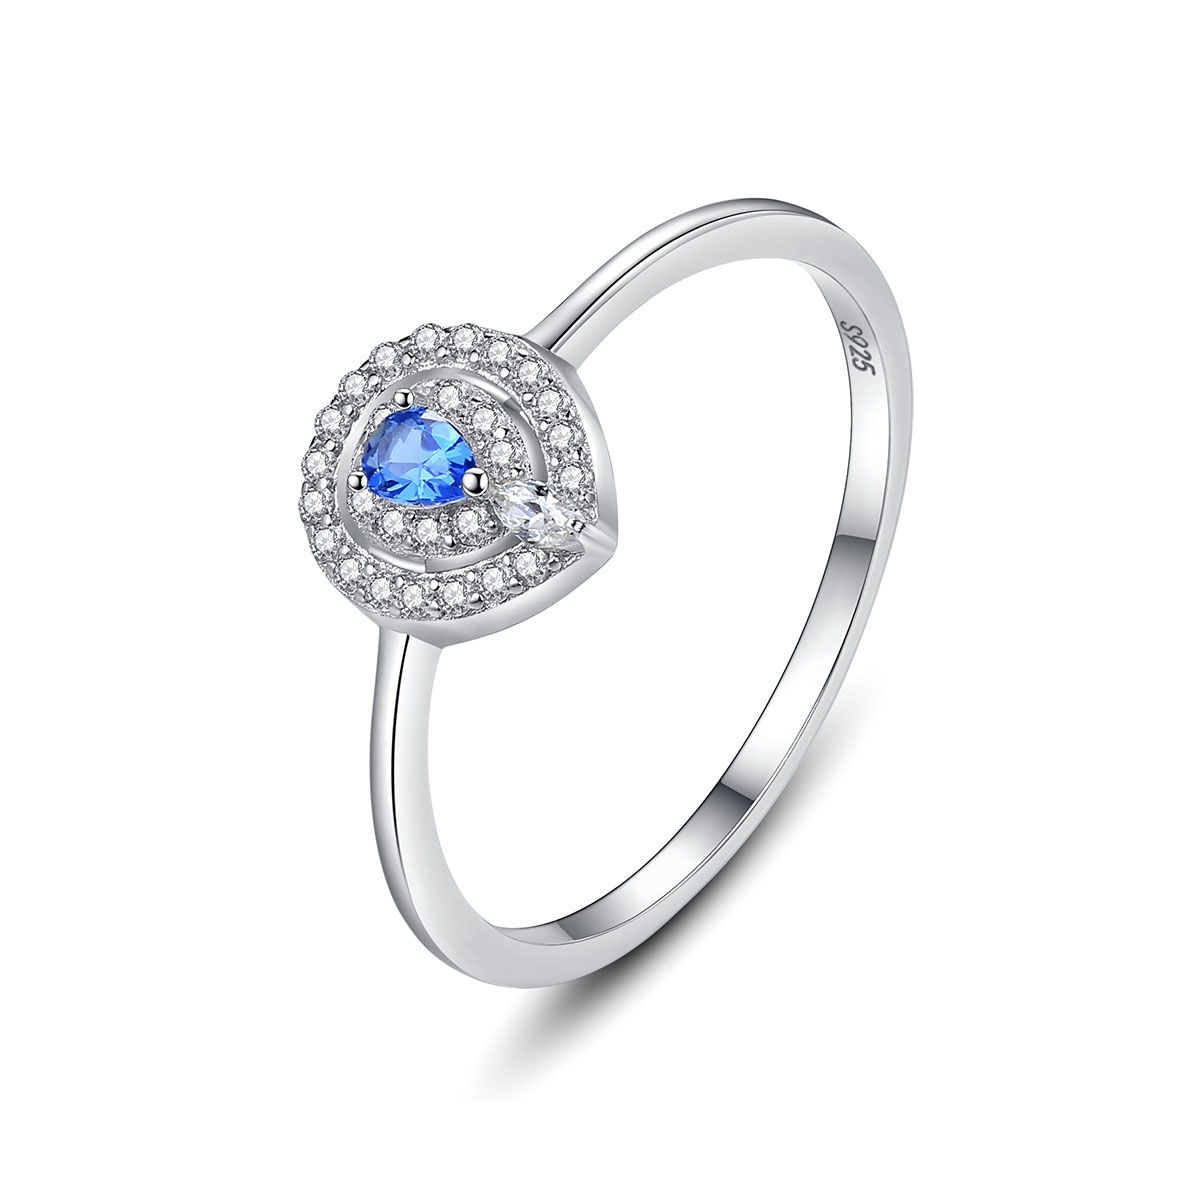 Gemstone Rings | Colored Stone, Pearl Rings in Houston, TX